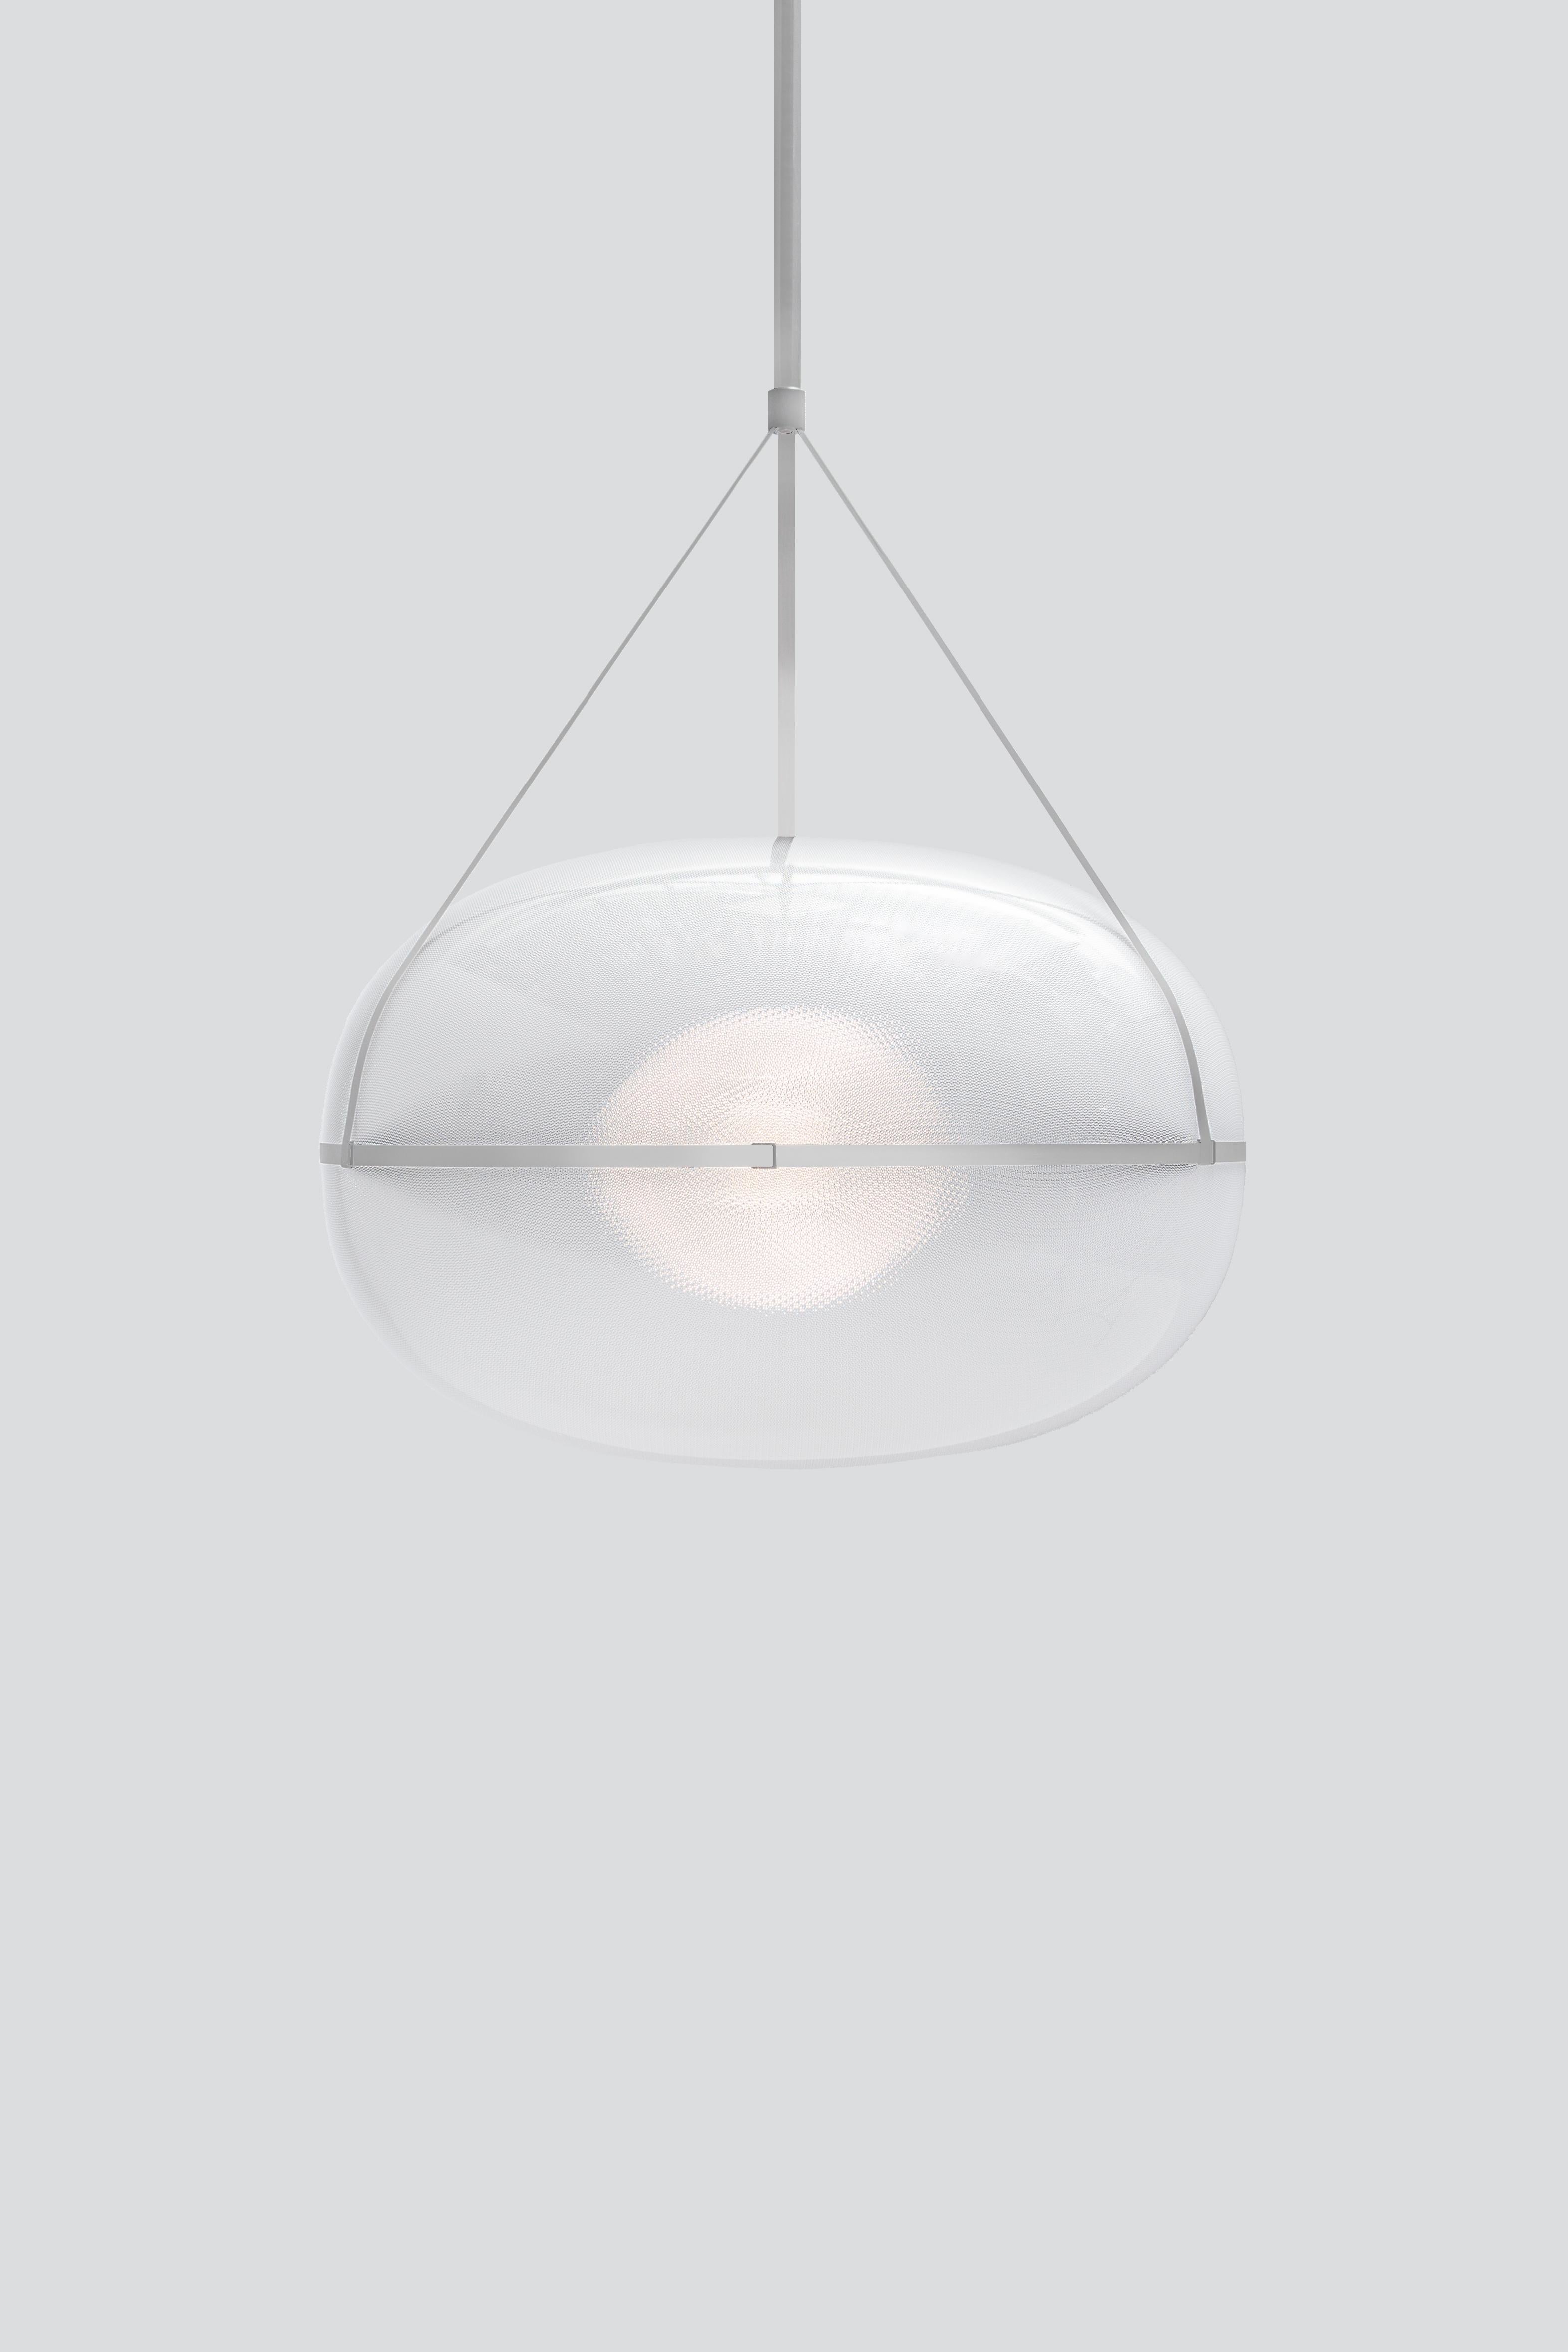 Organic Modern Contemporary Silver Pendant Lamp 'Iris', A/A For Sale